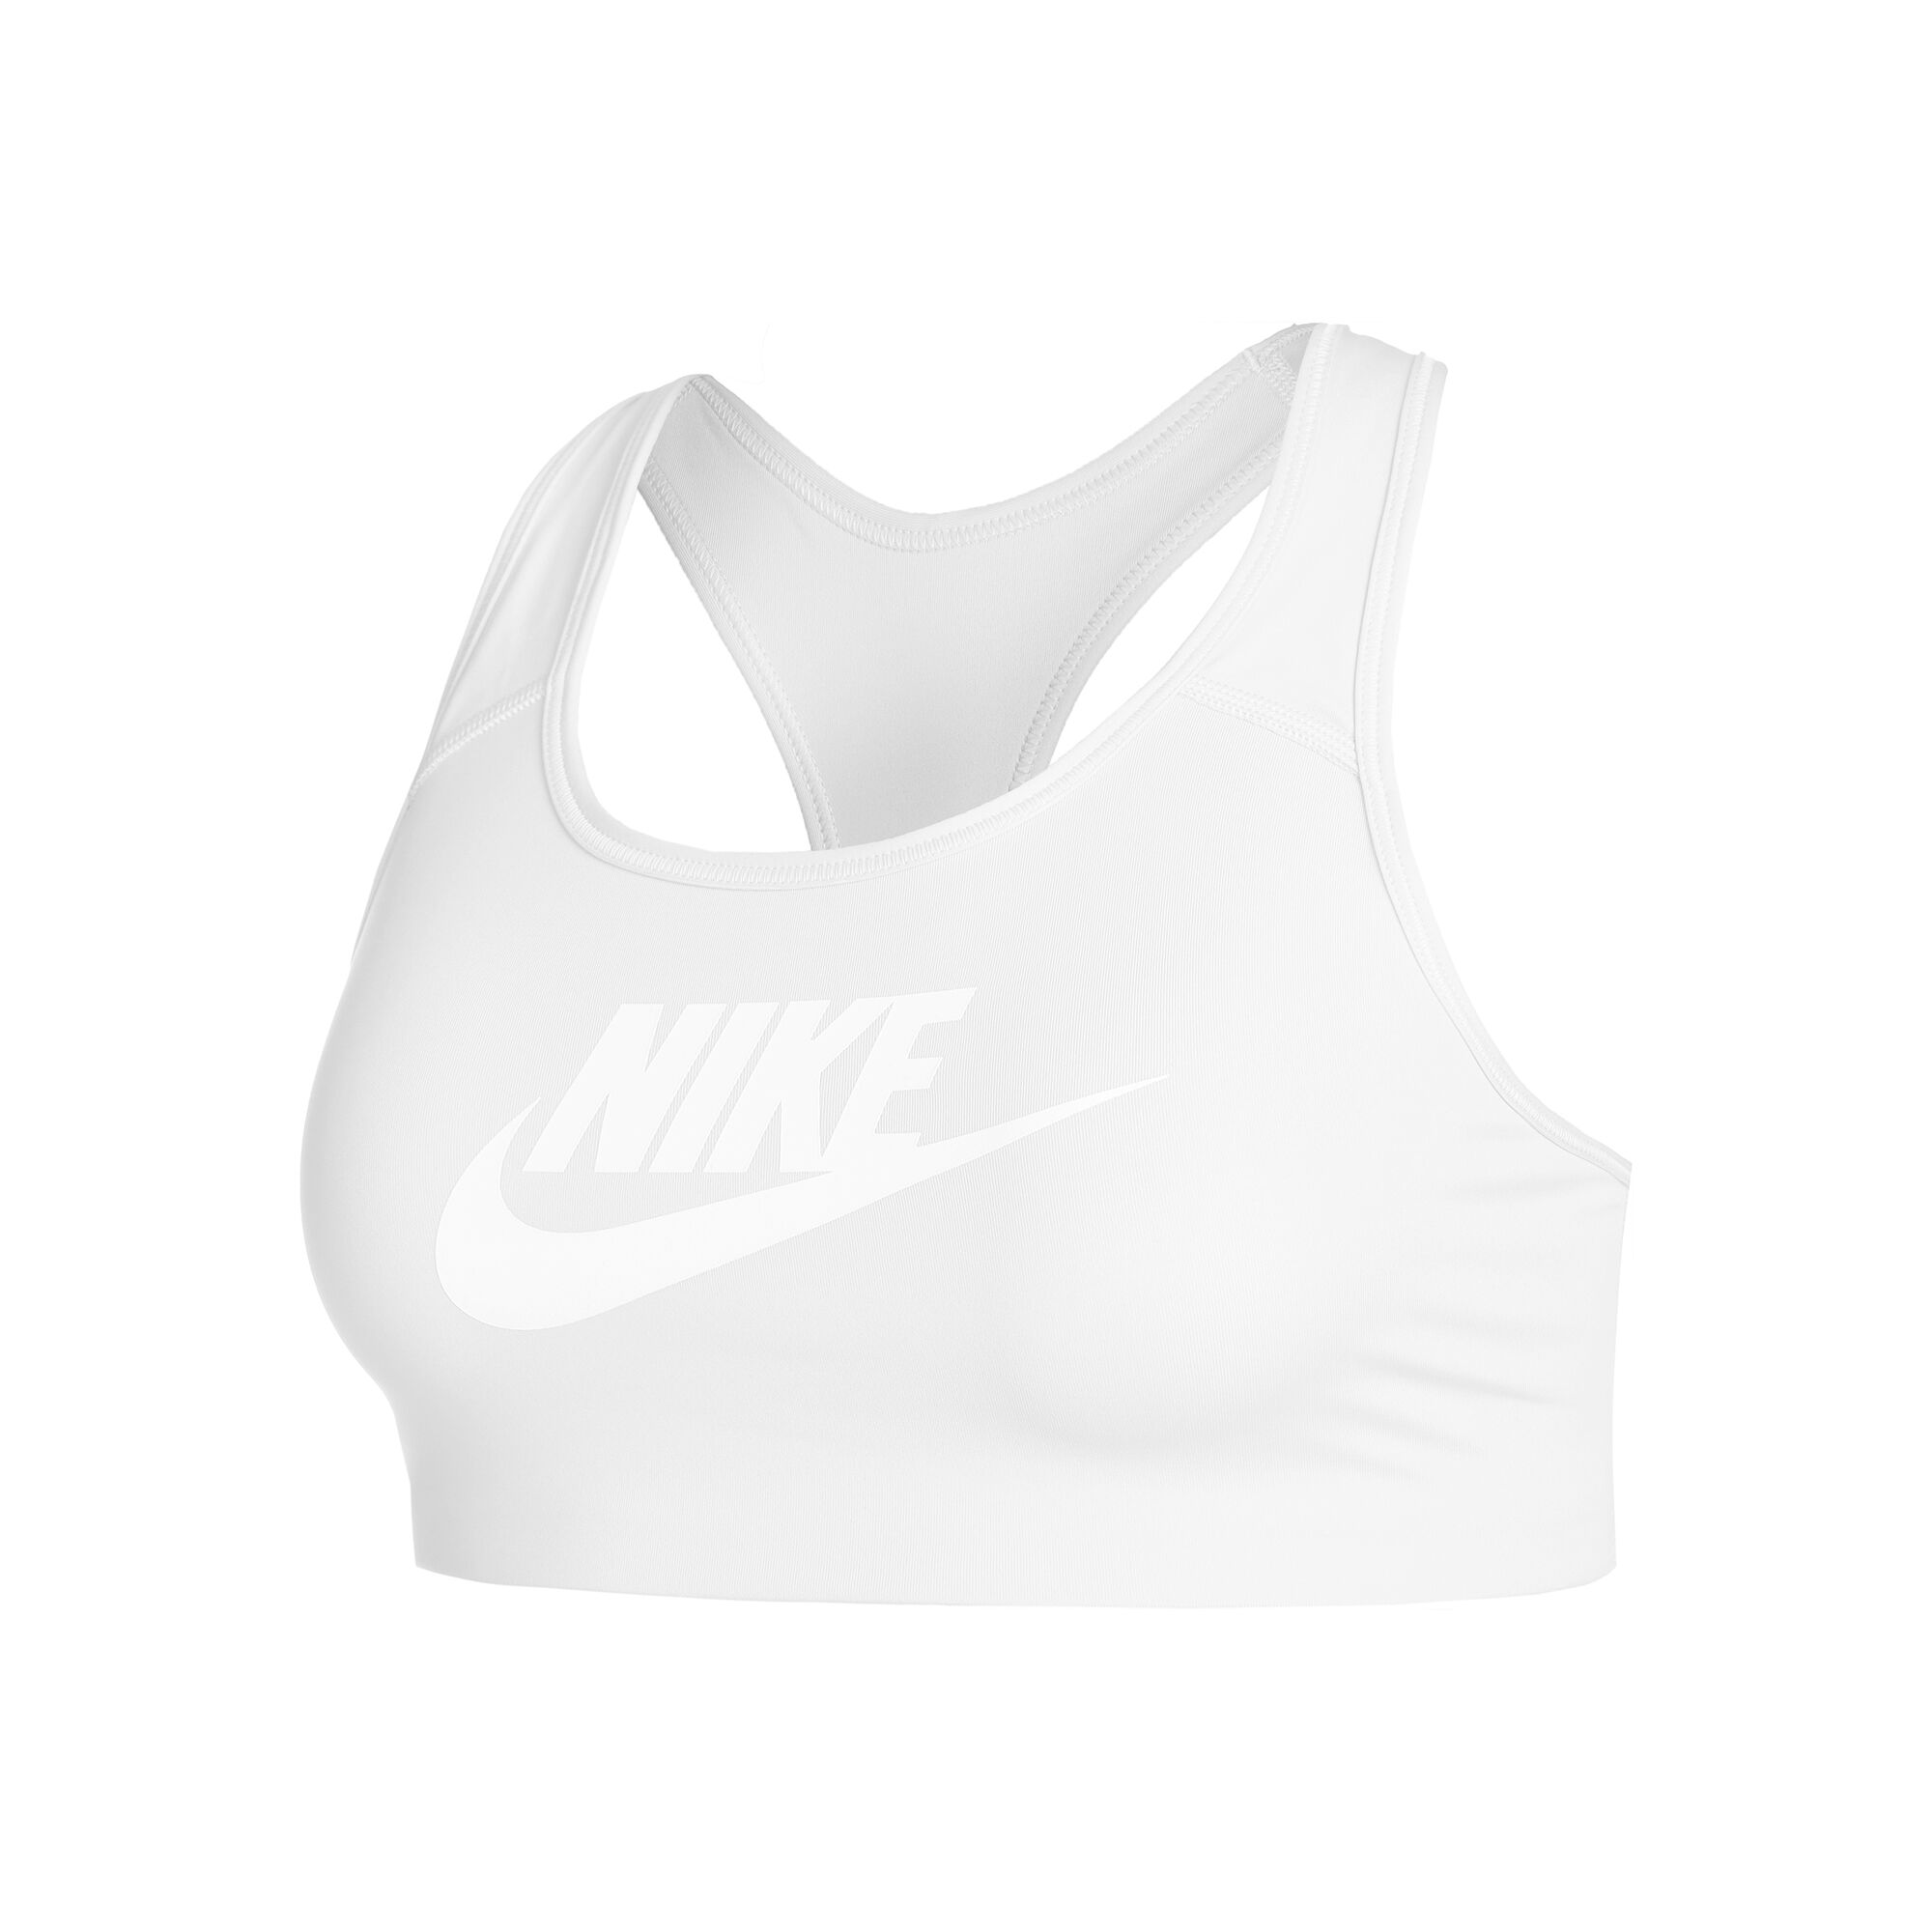  Nike Women's Swoosh Futura Sports Bra (L, White